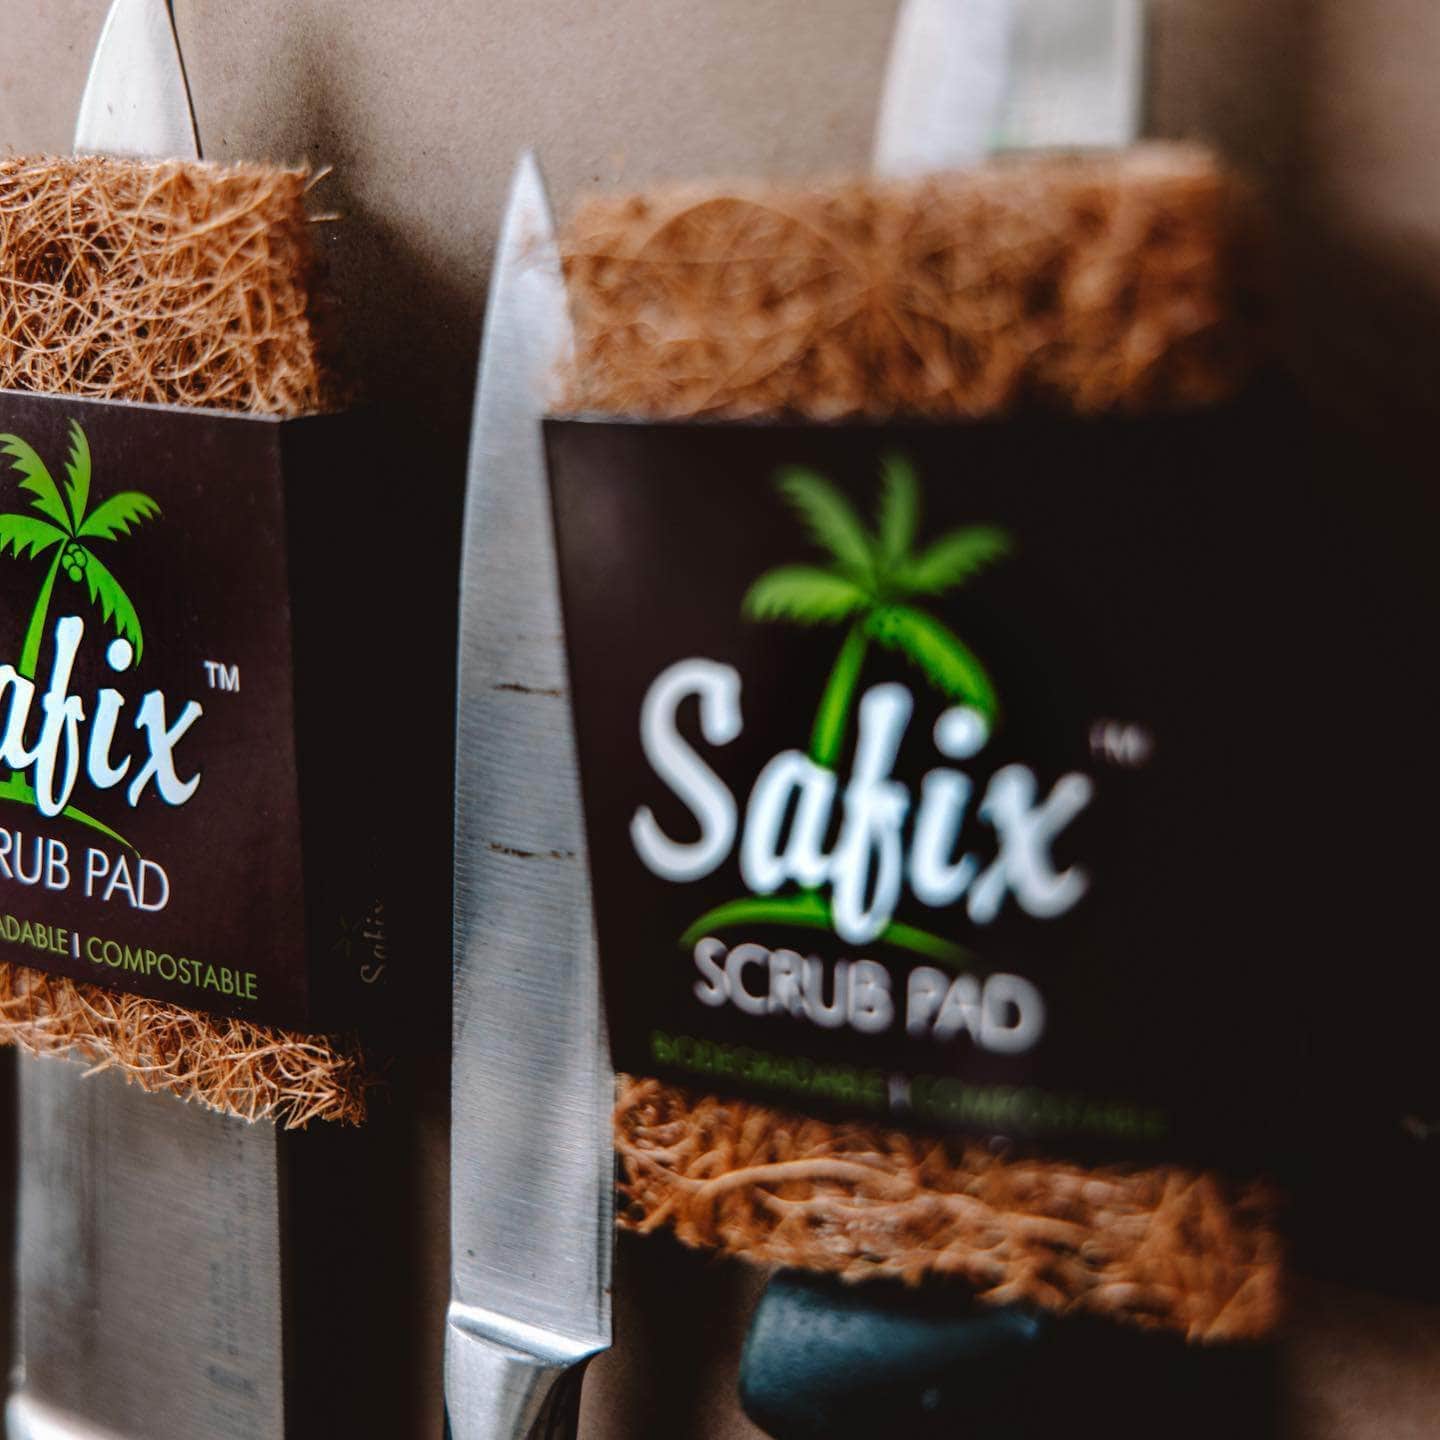 Safix Soap Dishes Safix Coconut Fibre Compostable Scouring Pad